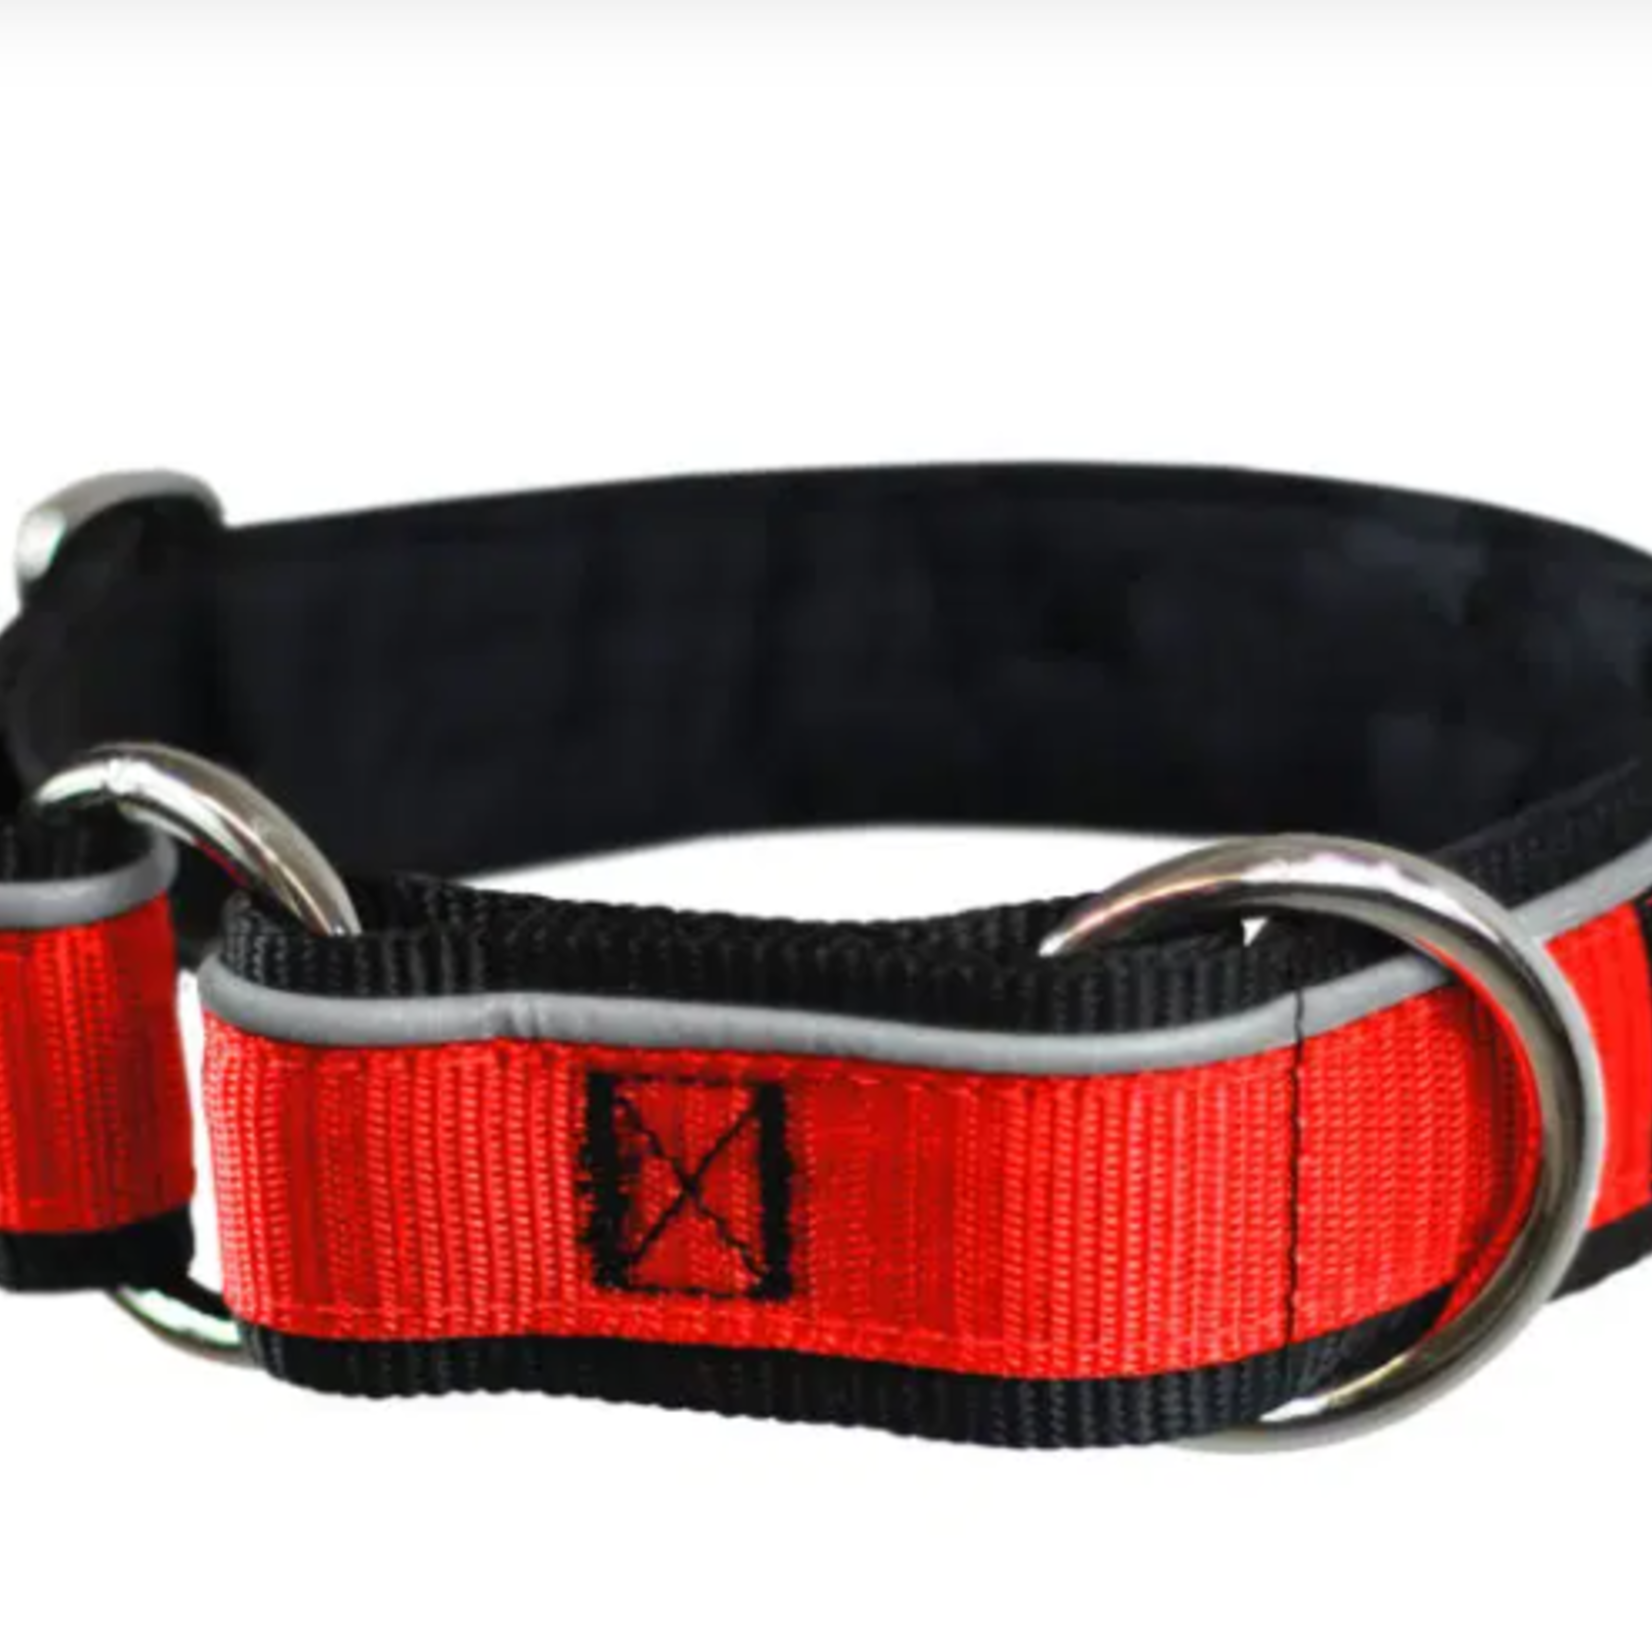 Nahak Padded Dog Collar With Reflective Band